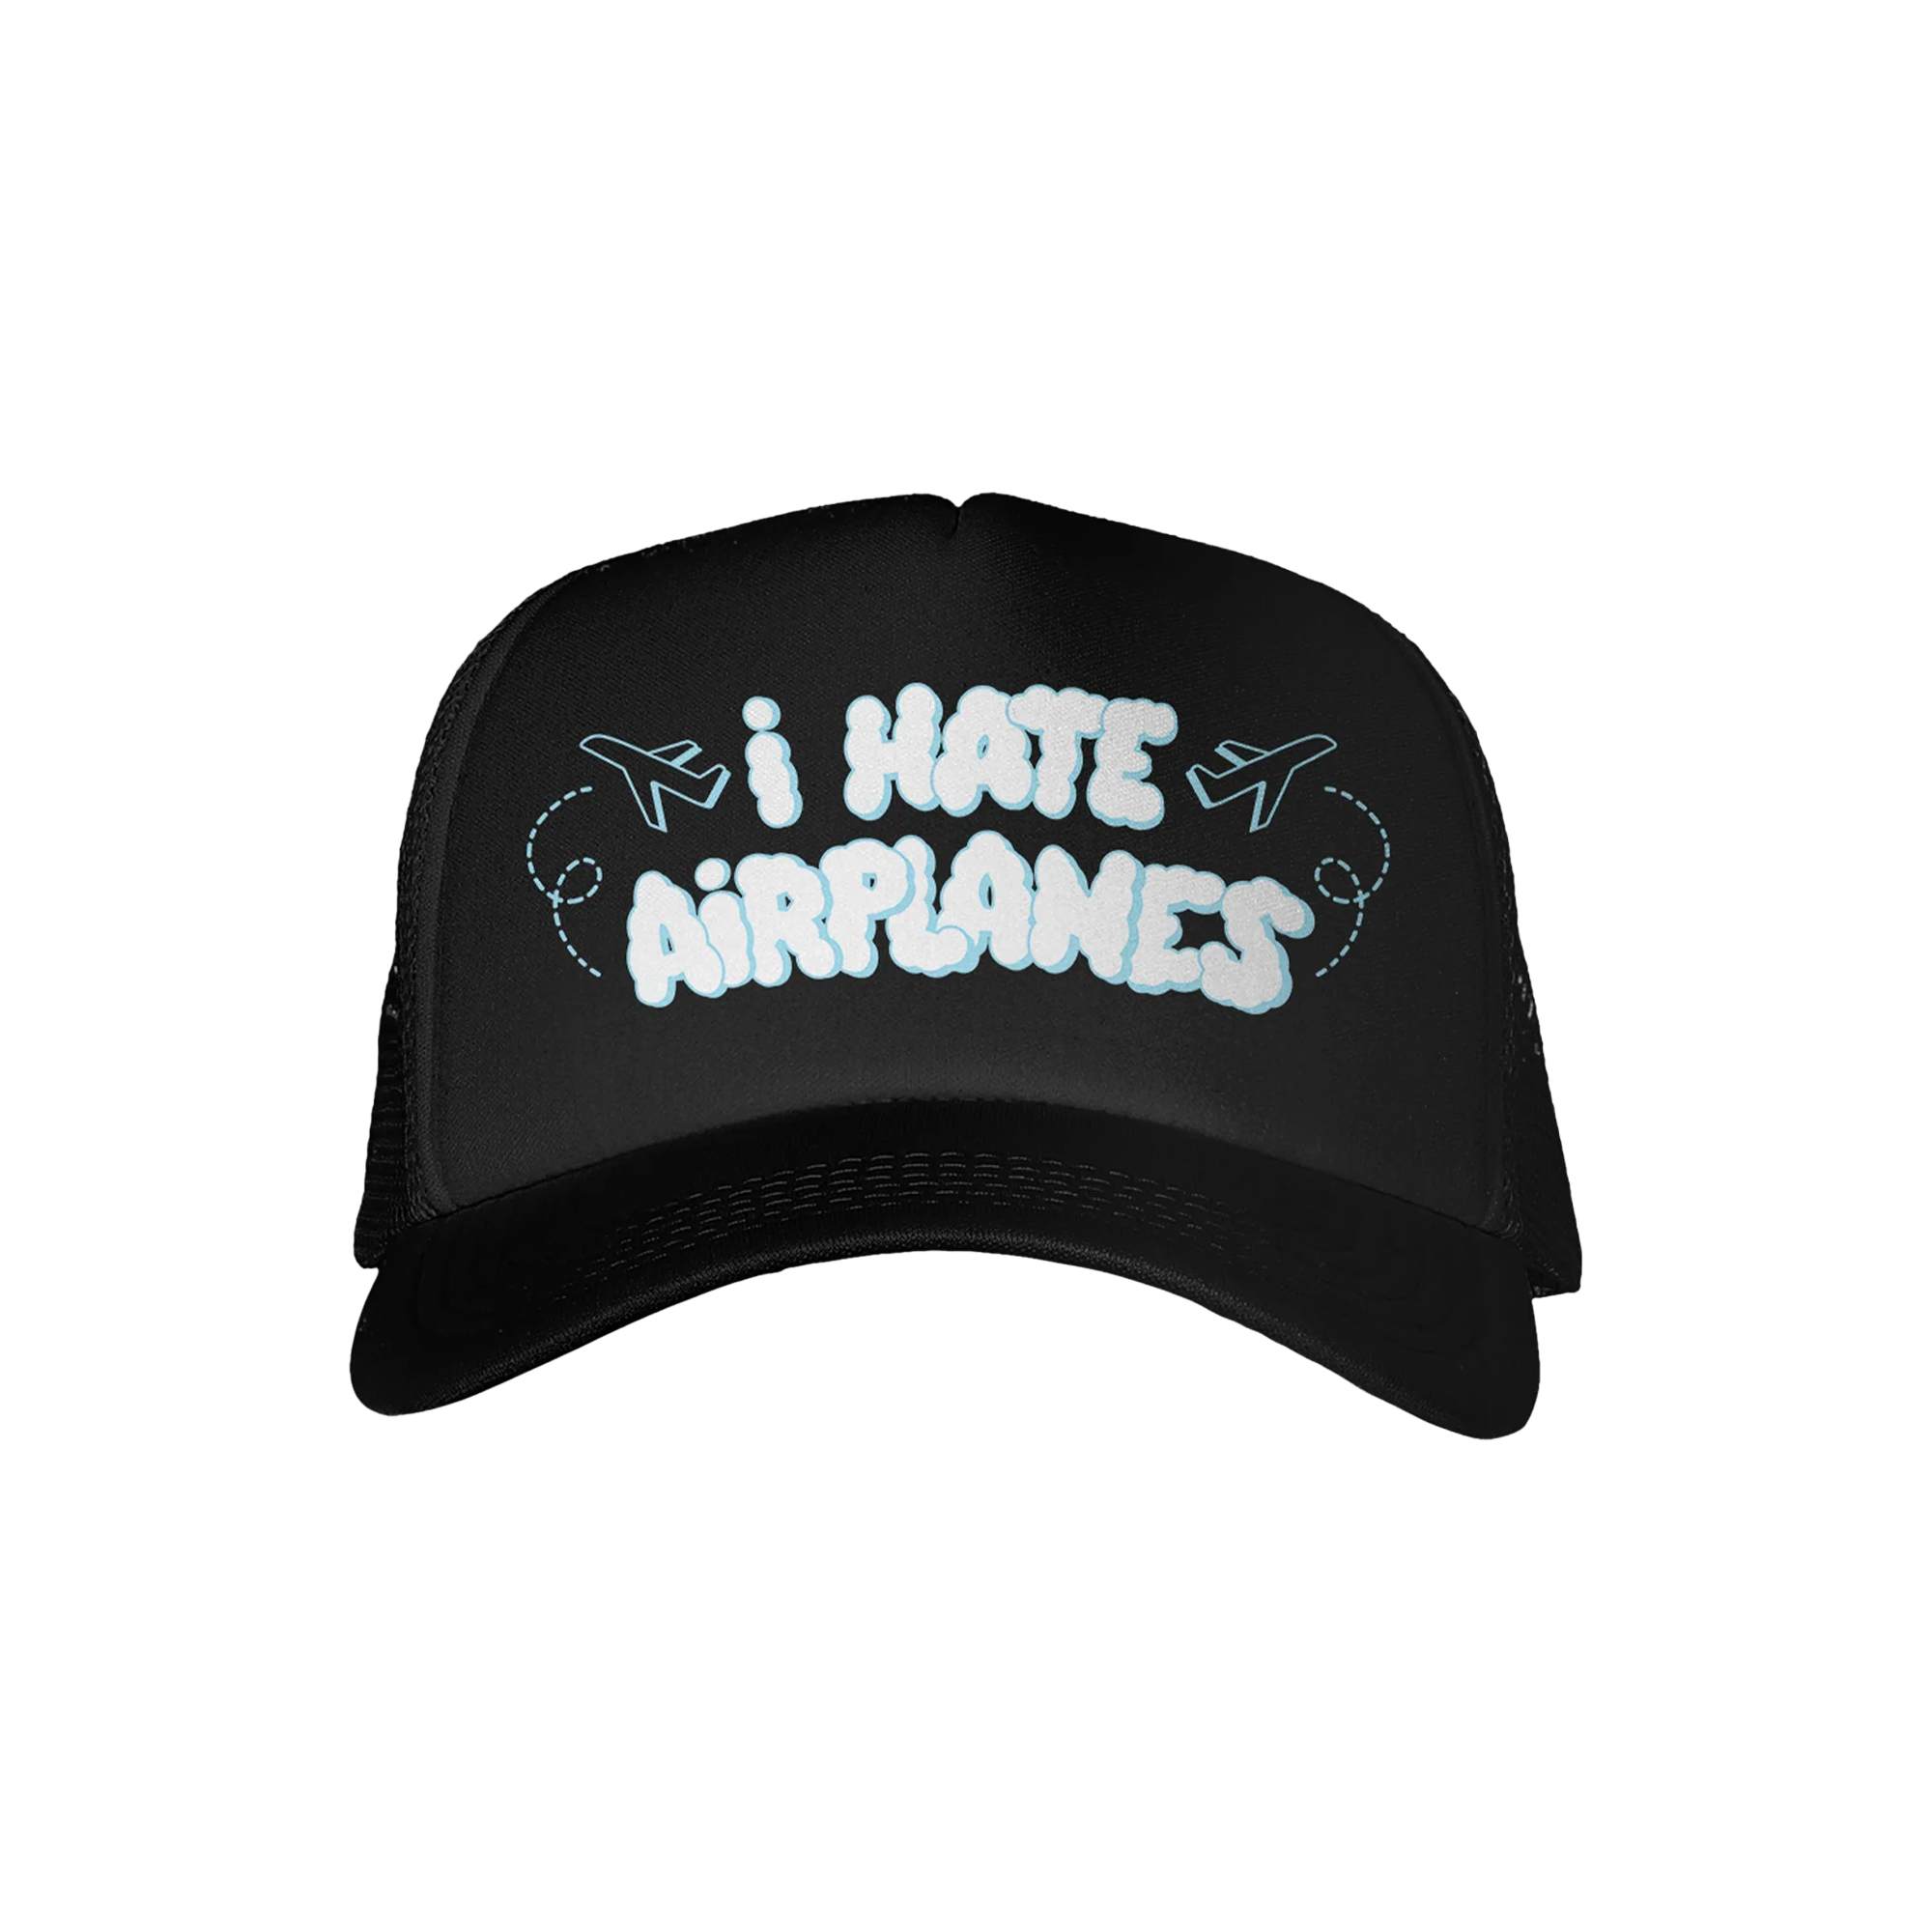 I Hate Airplanes Black Trucker Hat